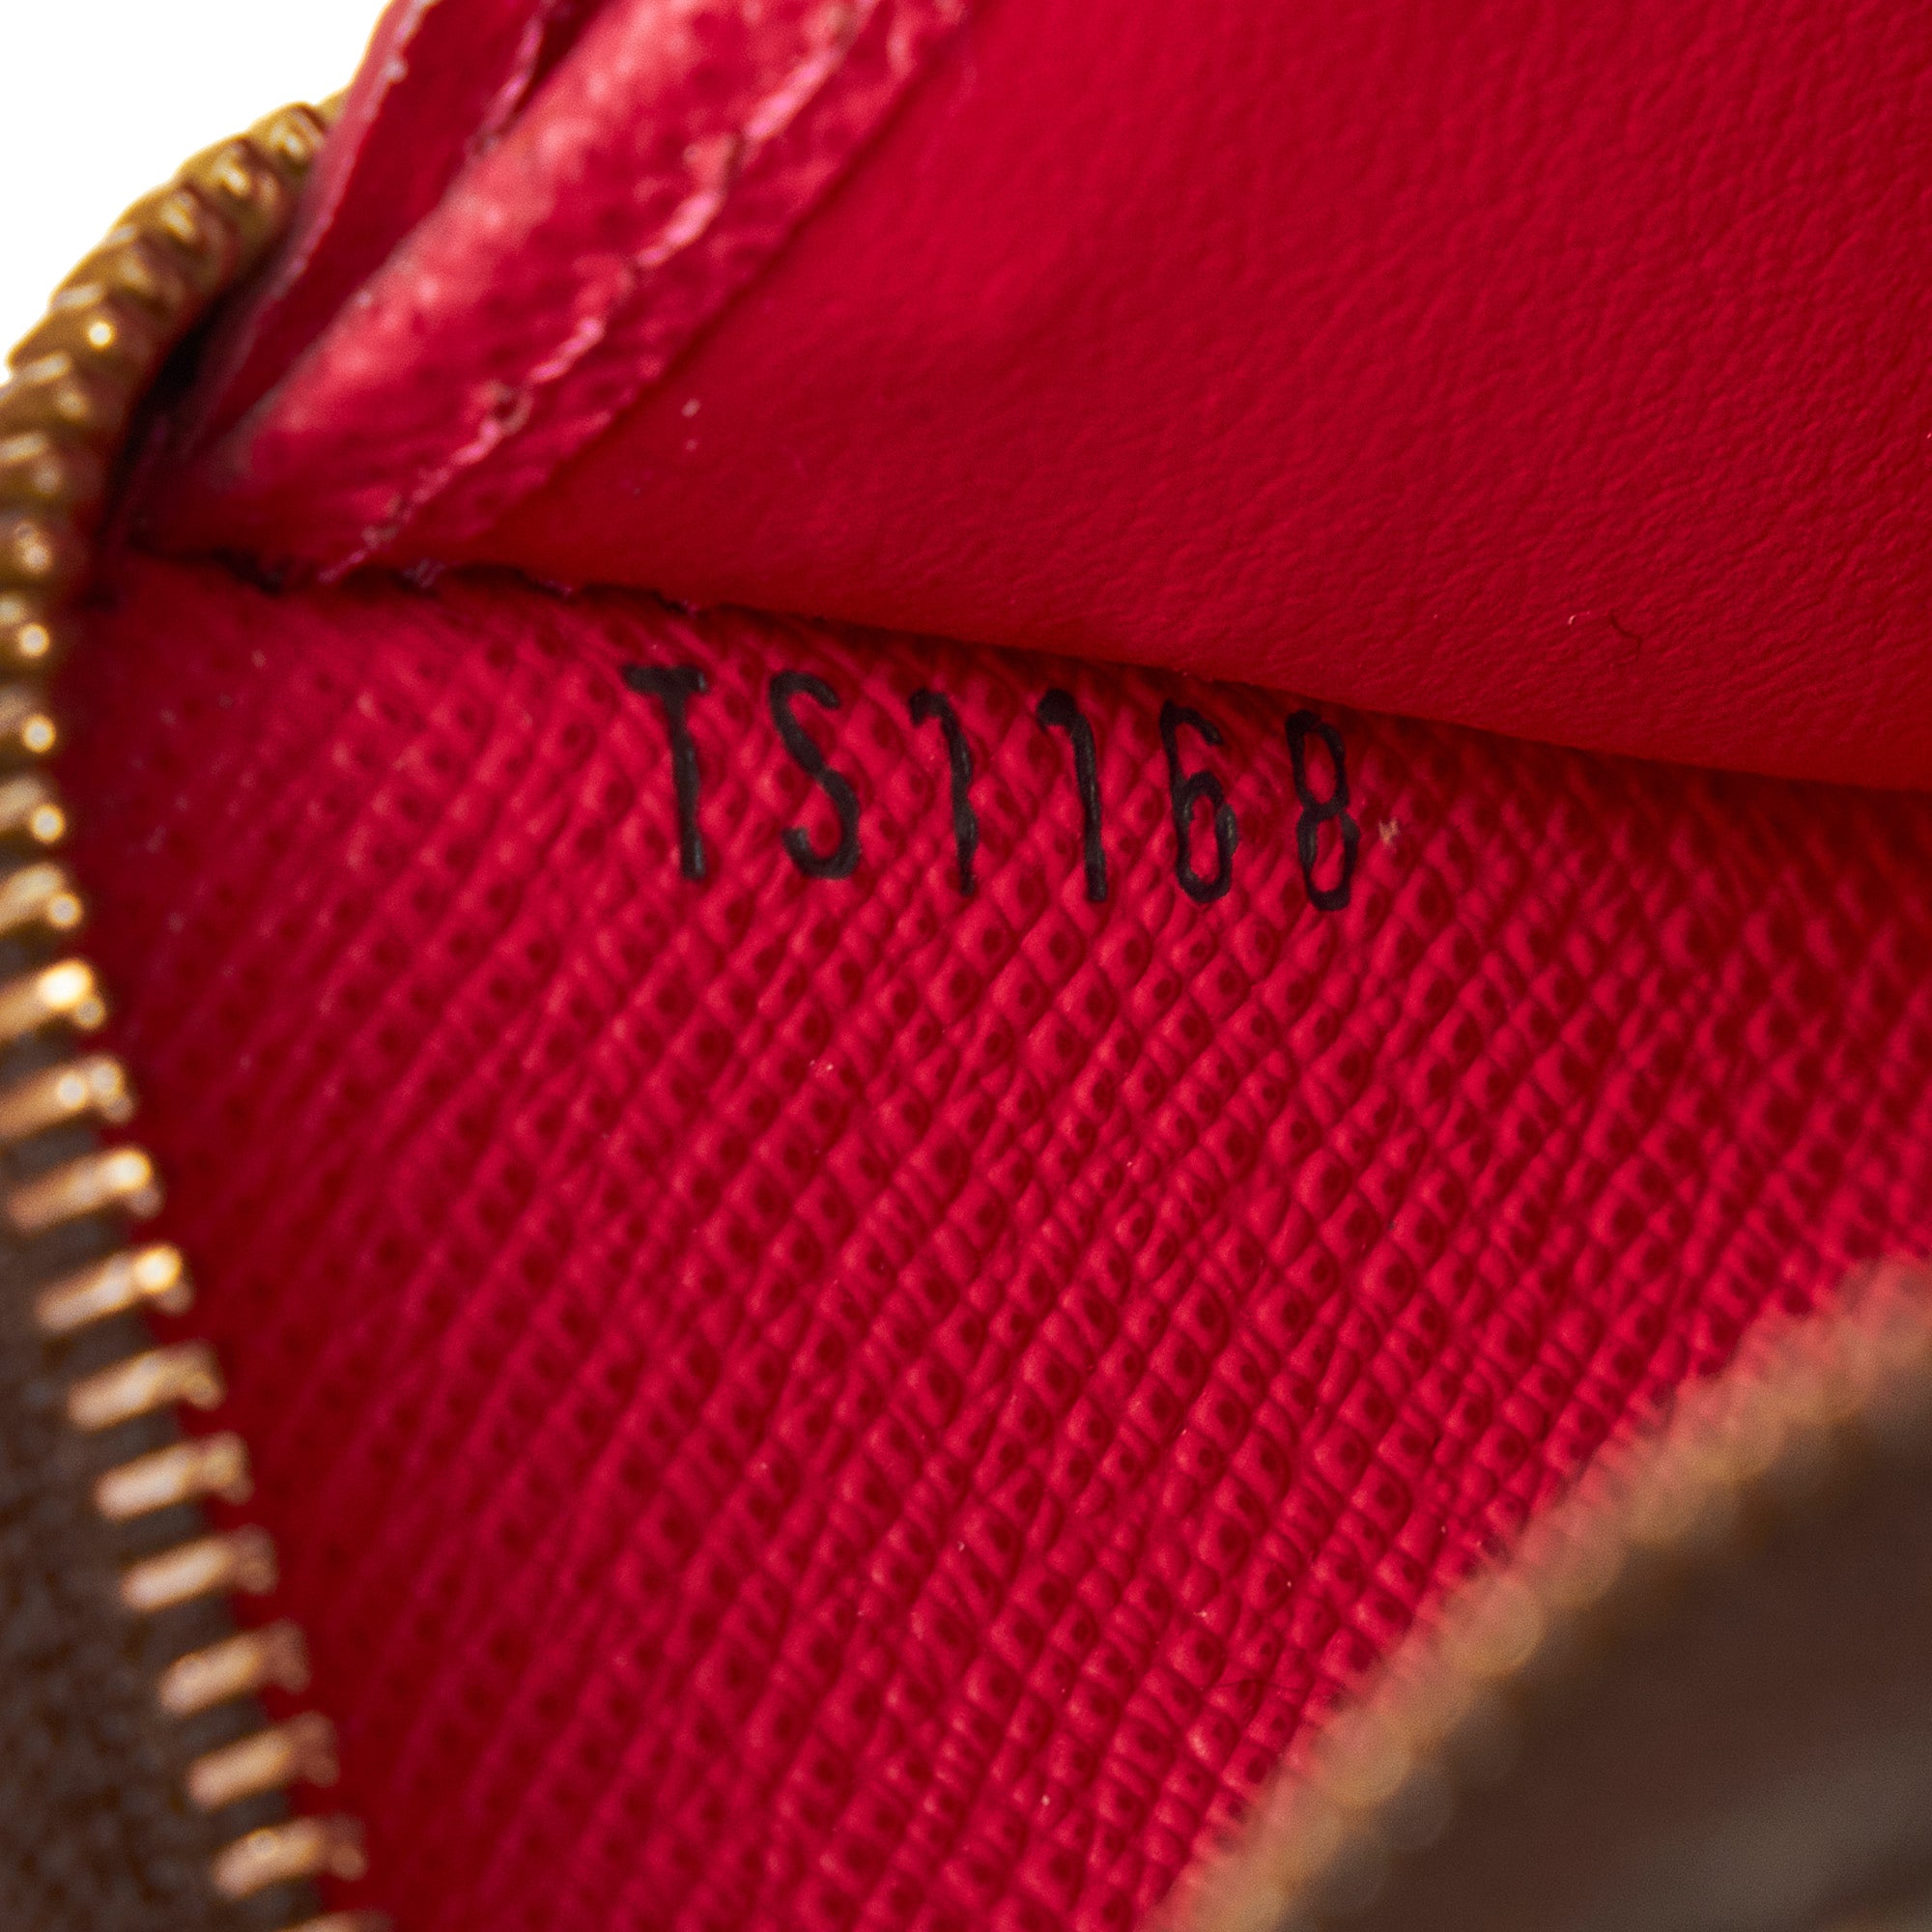 Louis Vuitton Summer Trunks Monogram Canvas Zippy Coin Purse Brown